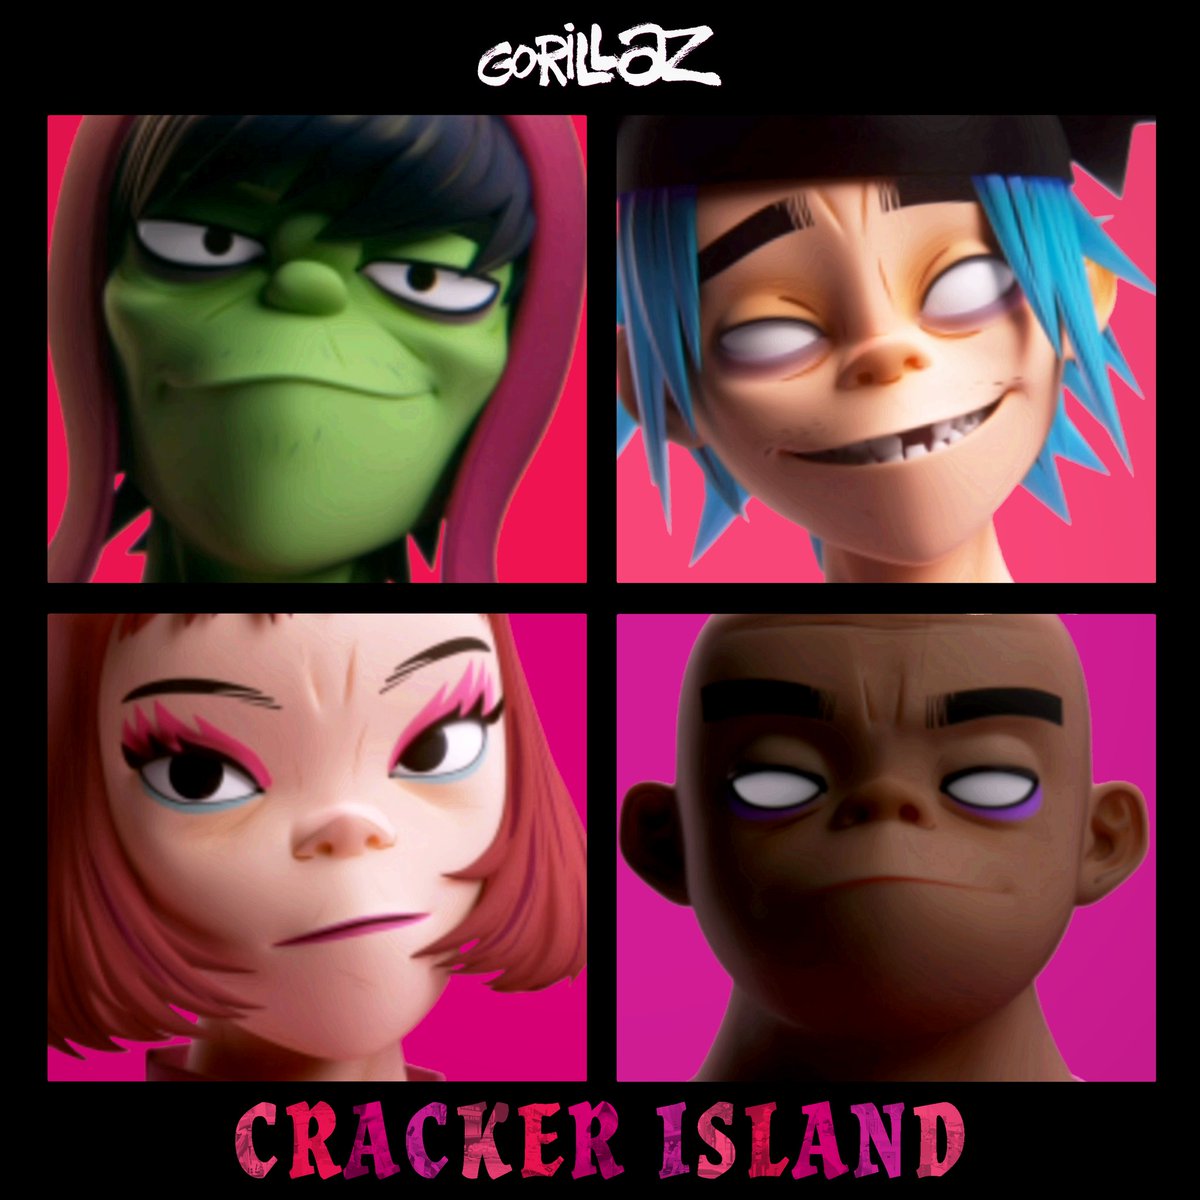 Cracker Island cover in Humanz style
#gorillaz #crackerisland #humanz #thelastcult